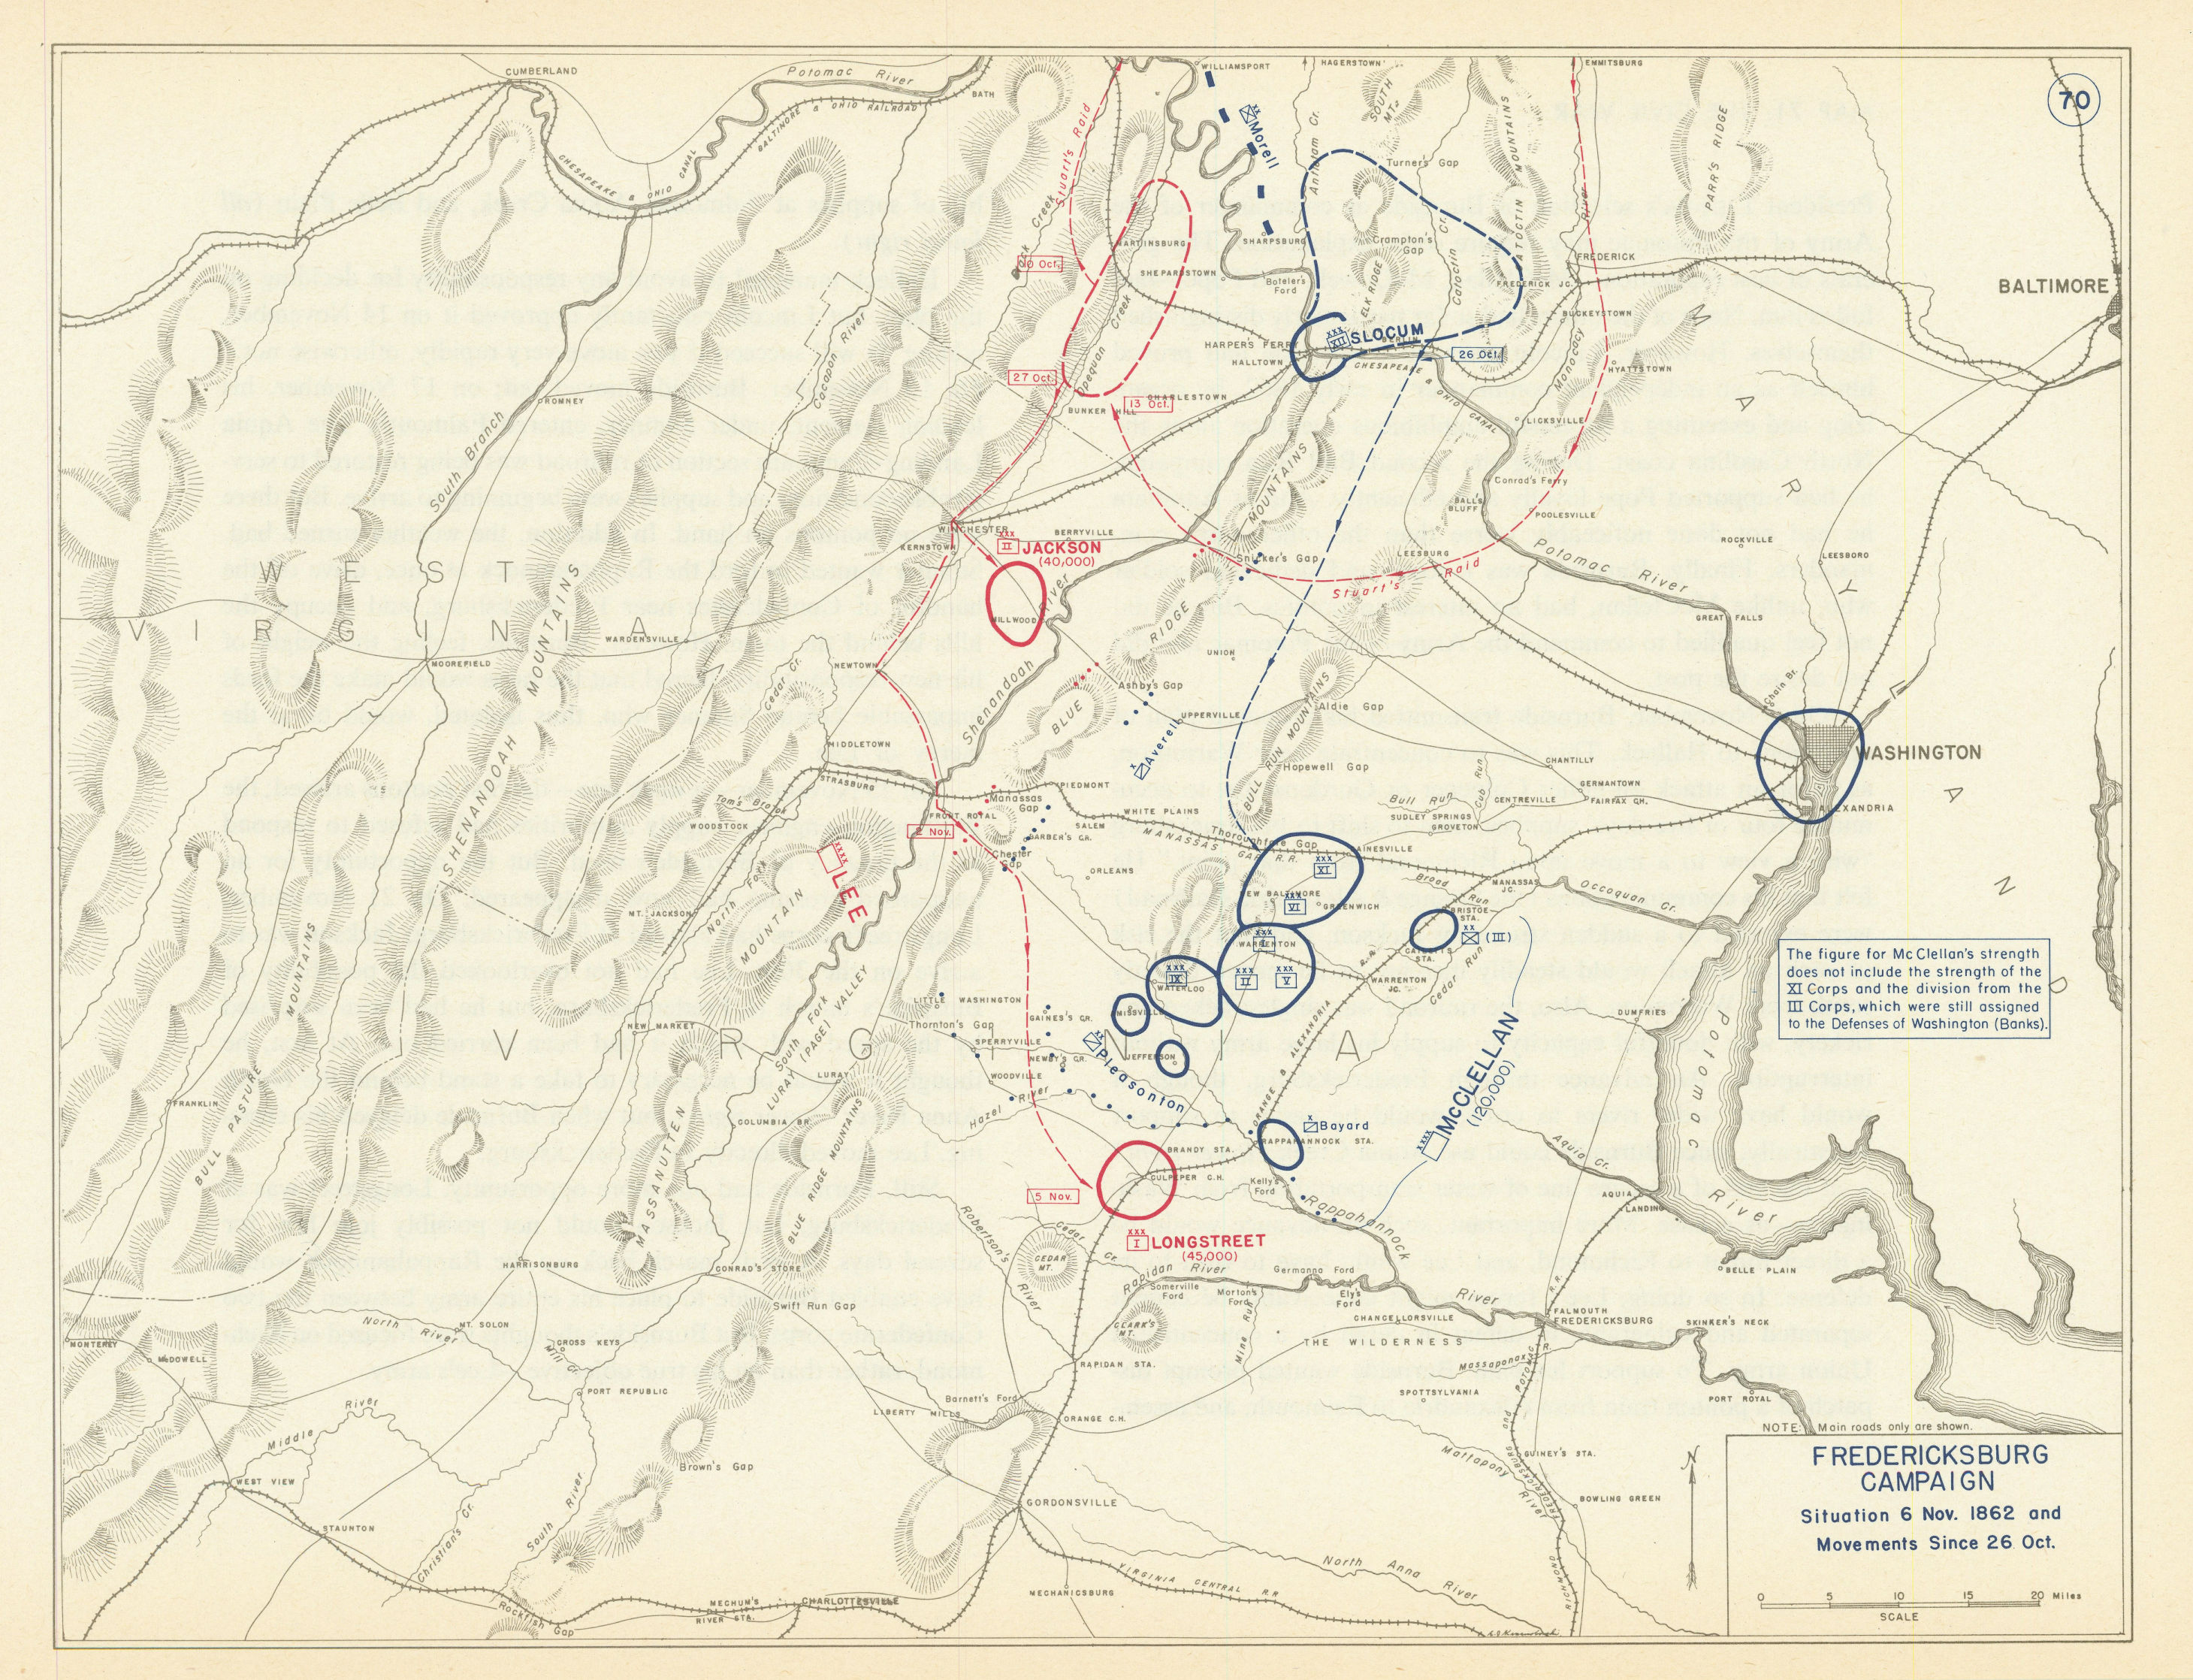 American Civil War. 26 Oct-6 Nov 1862 Fredericksburg Campaign 1959 old map